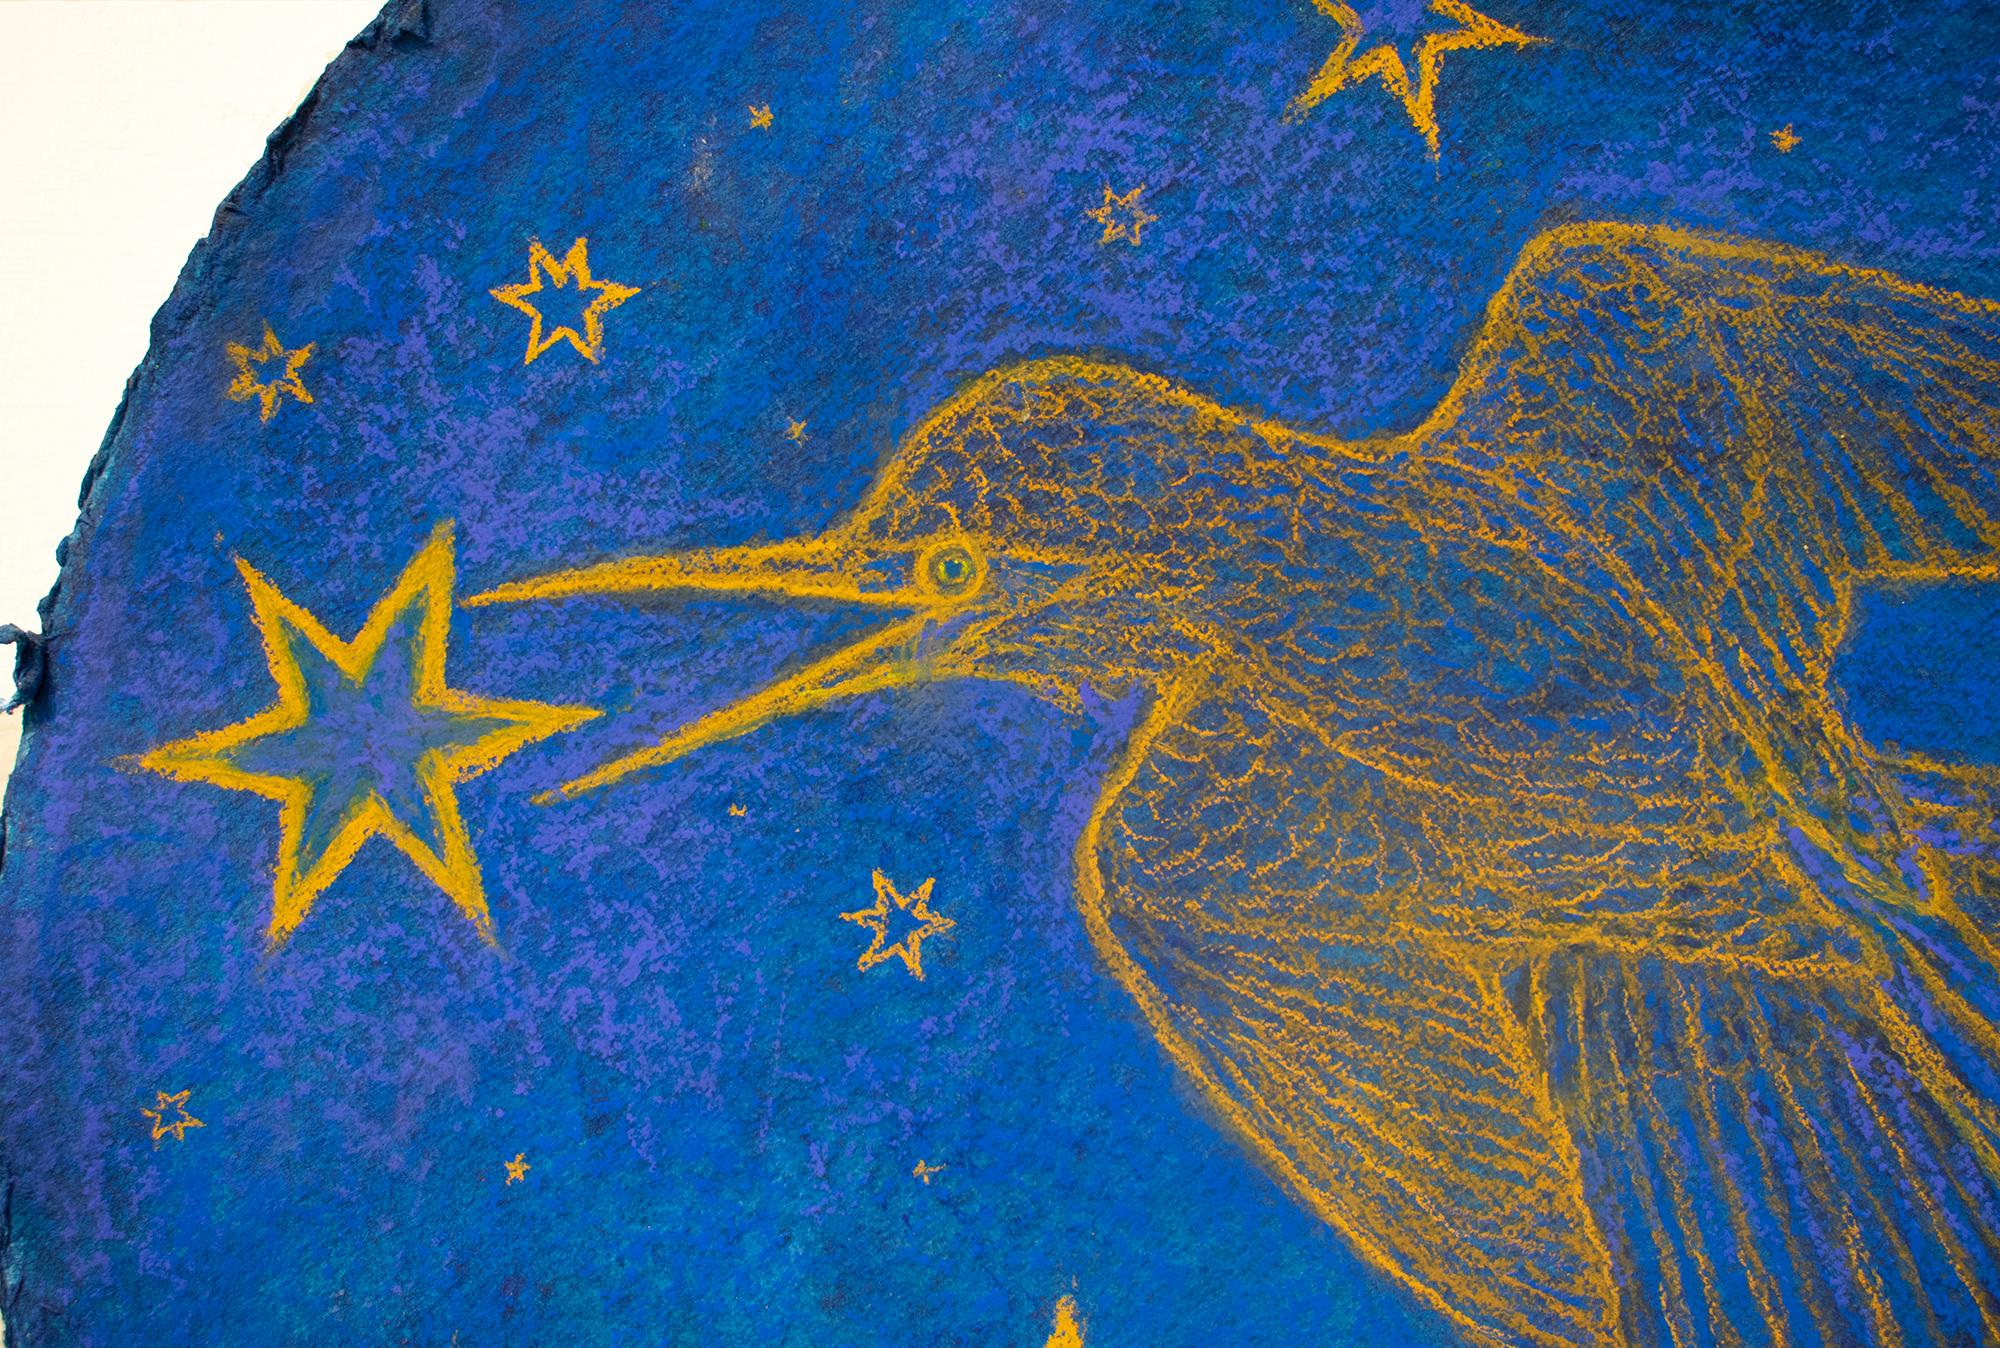 Hummingbird Augury: Cobalt Blue Pastel Drawing on Handmade Paper w/ Gold Stars - Painting by Nicholas Kahn & Richard Selesnick